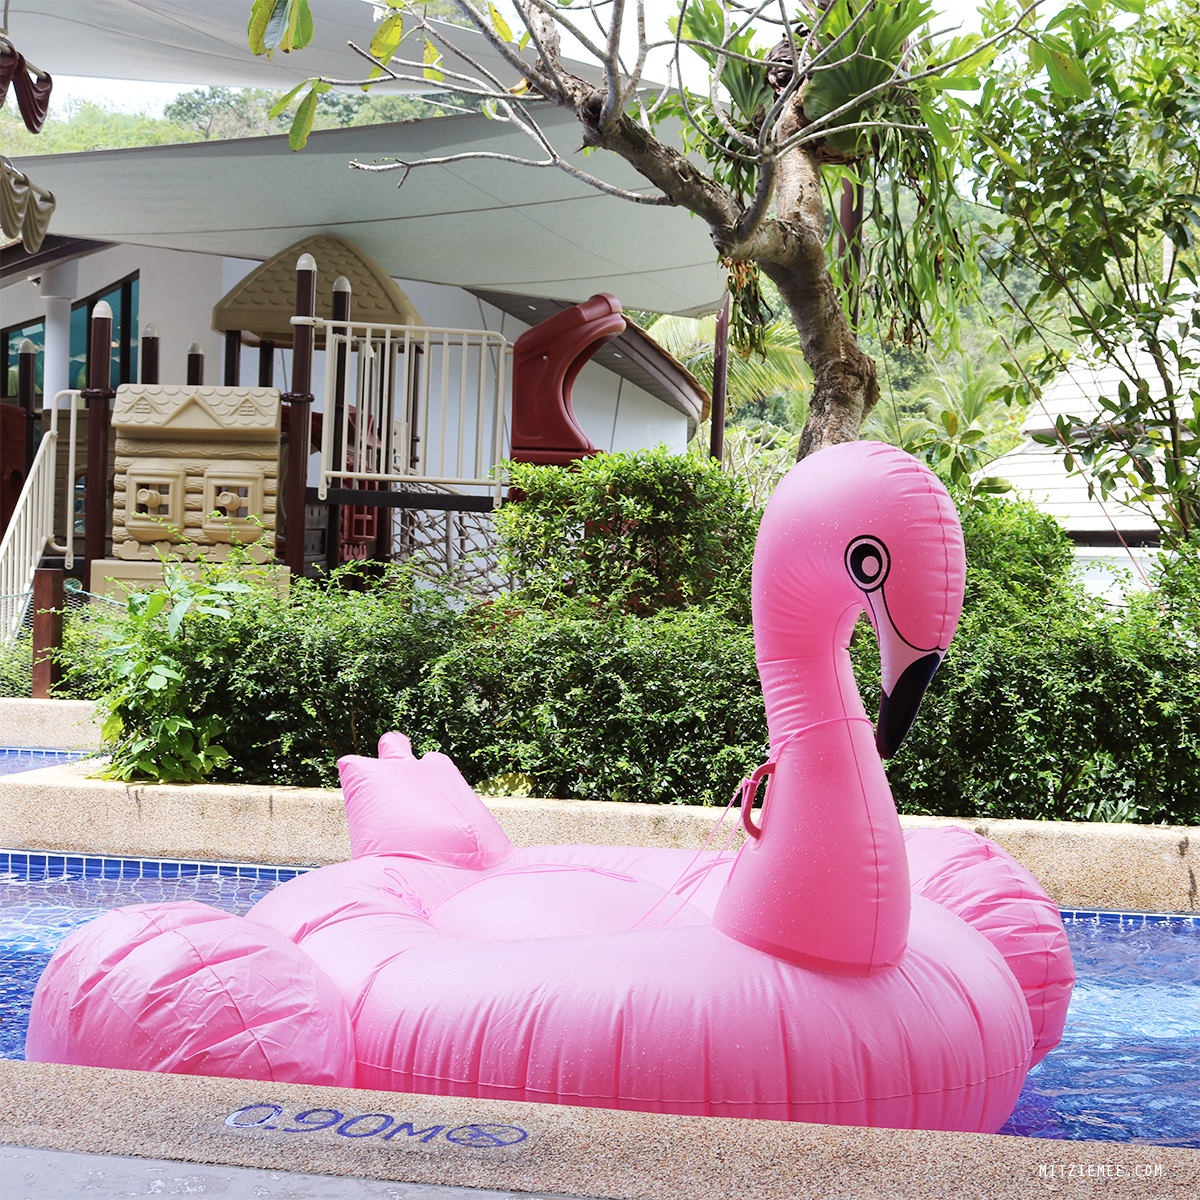 Giant flamingo float at Nai Yang Marriott, Phuket